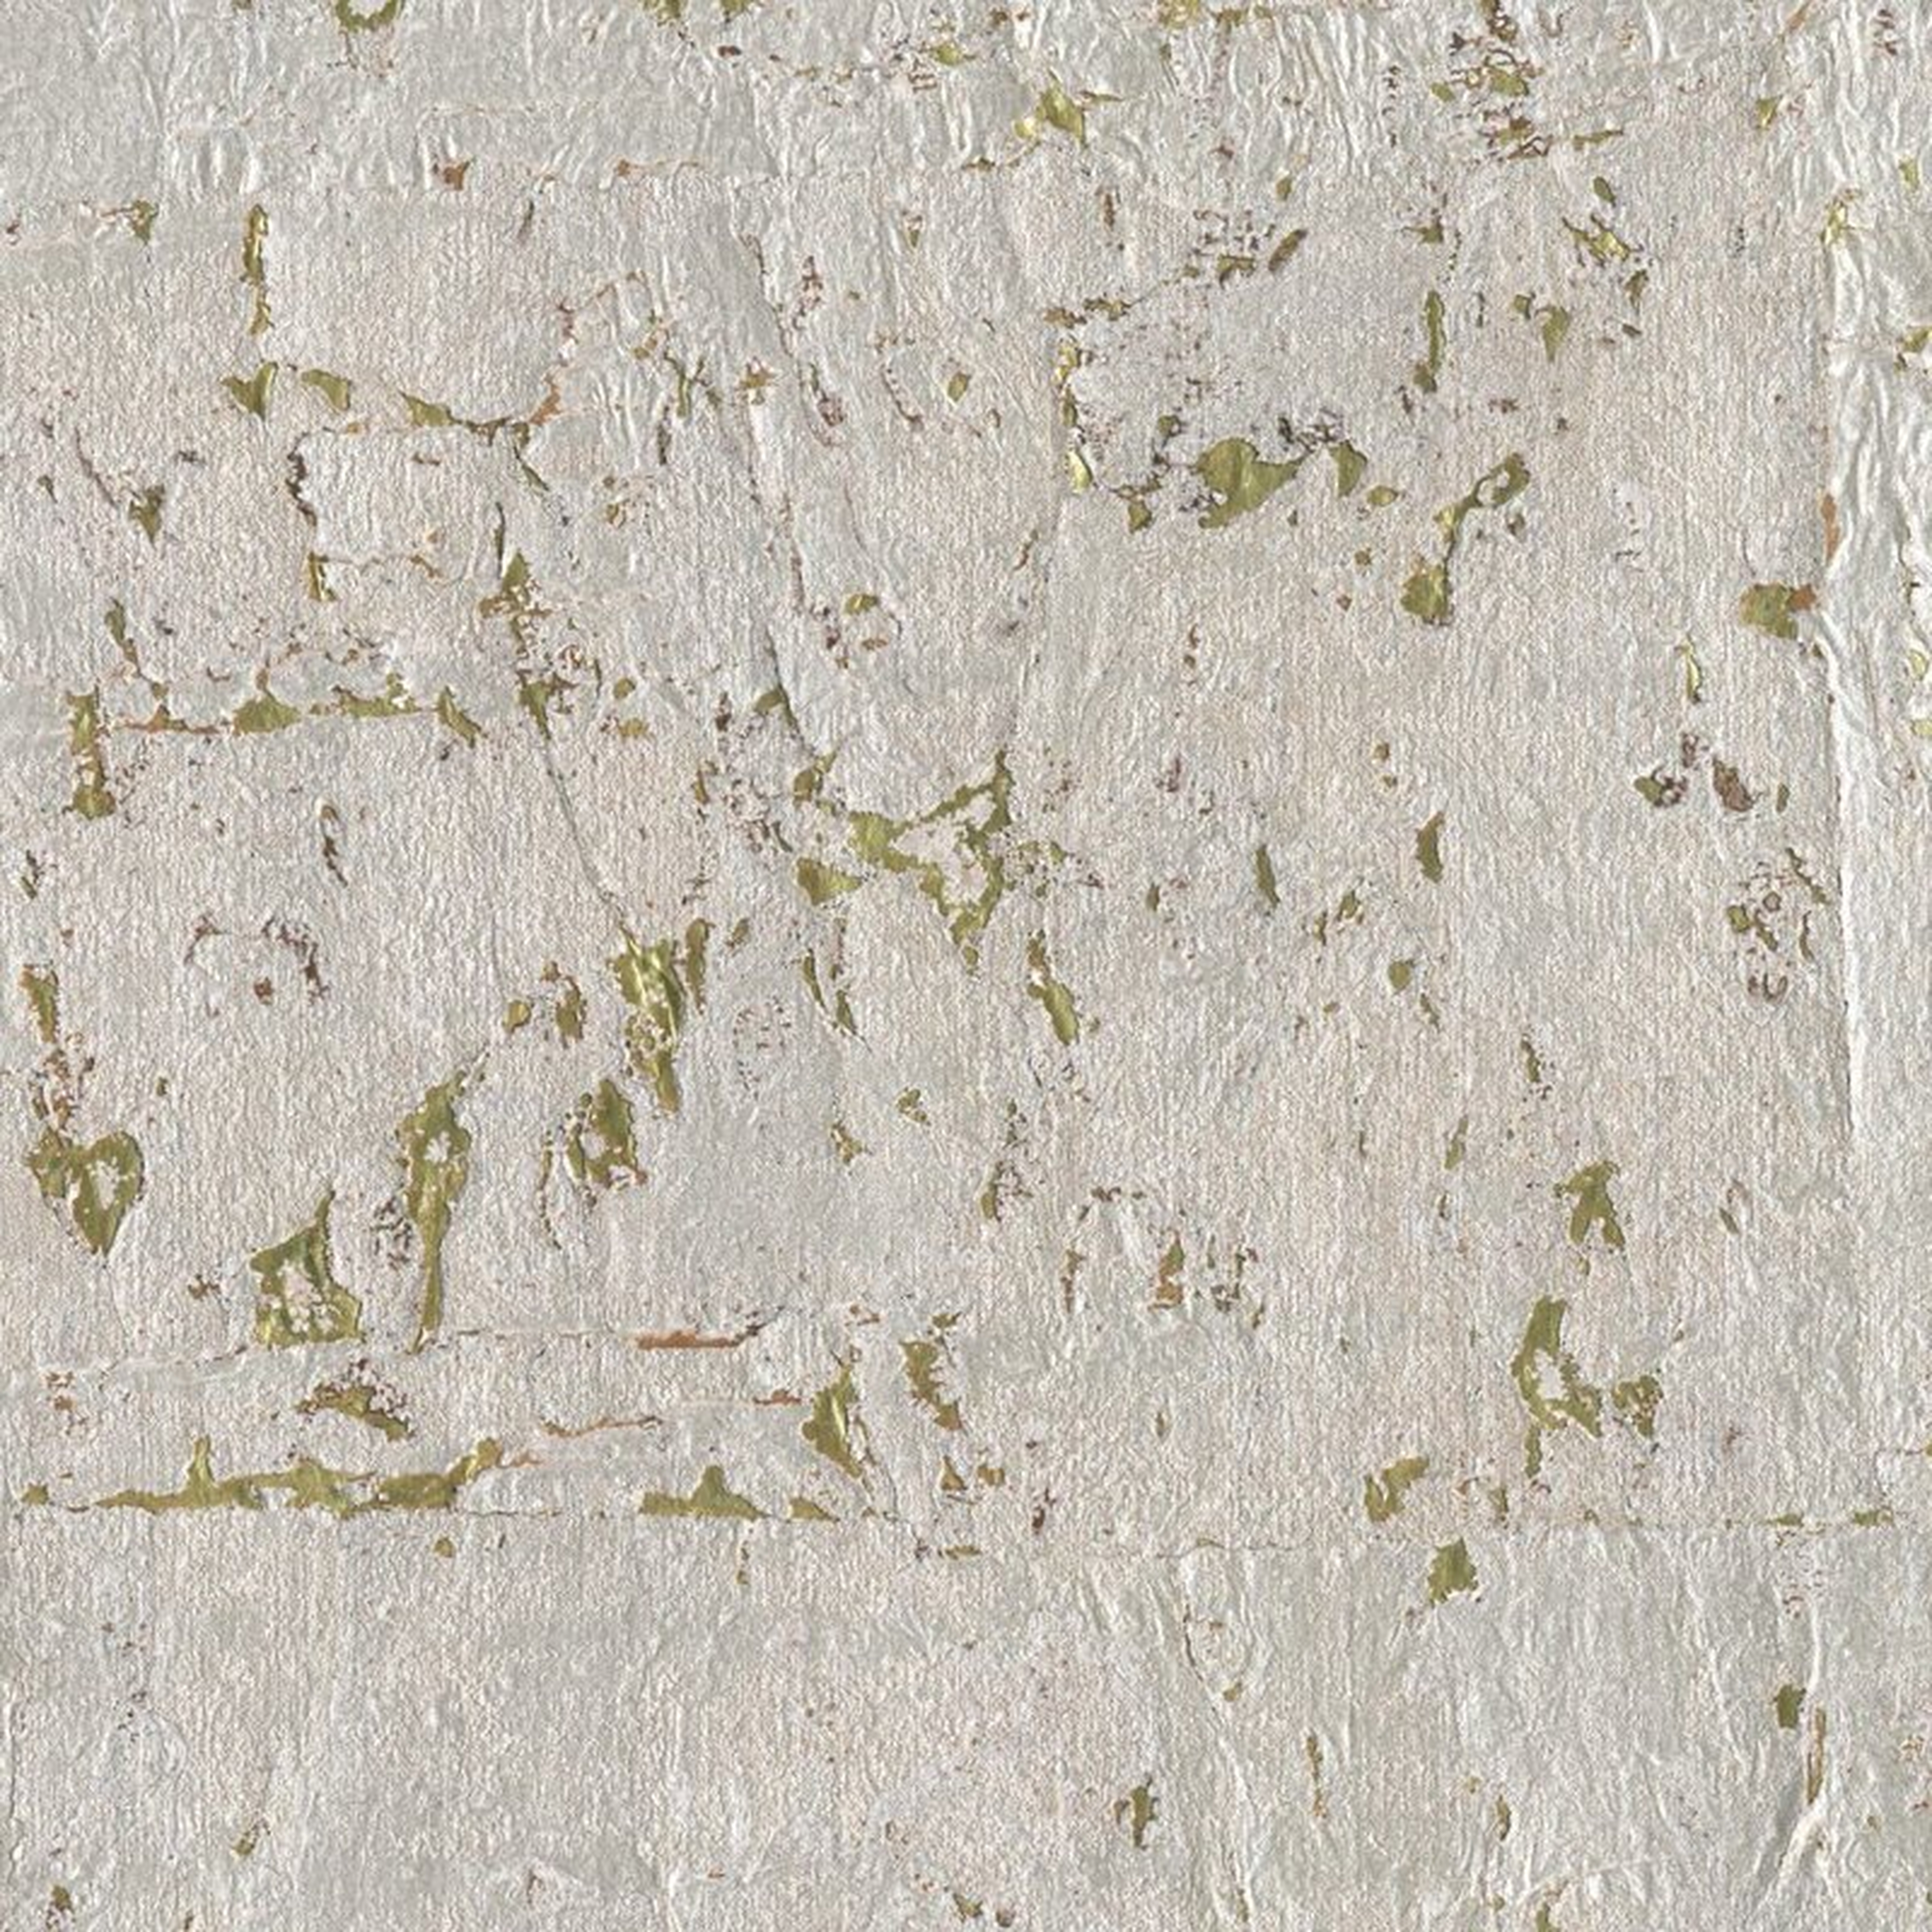 Candice Olson Modern Nature 24' L x 36" W Textured Wallpaper Roll, Metallic Silvery Gray/Dark Brown/Metallic Gold - Wayfair